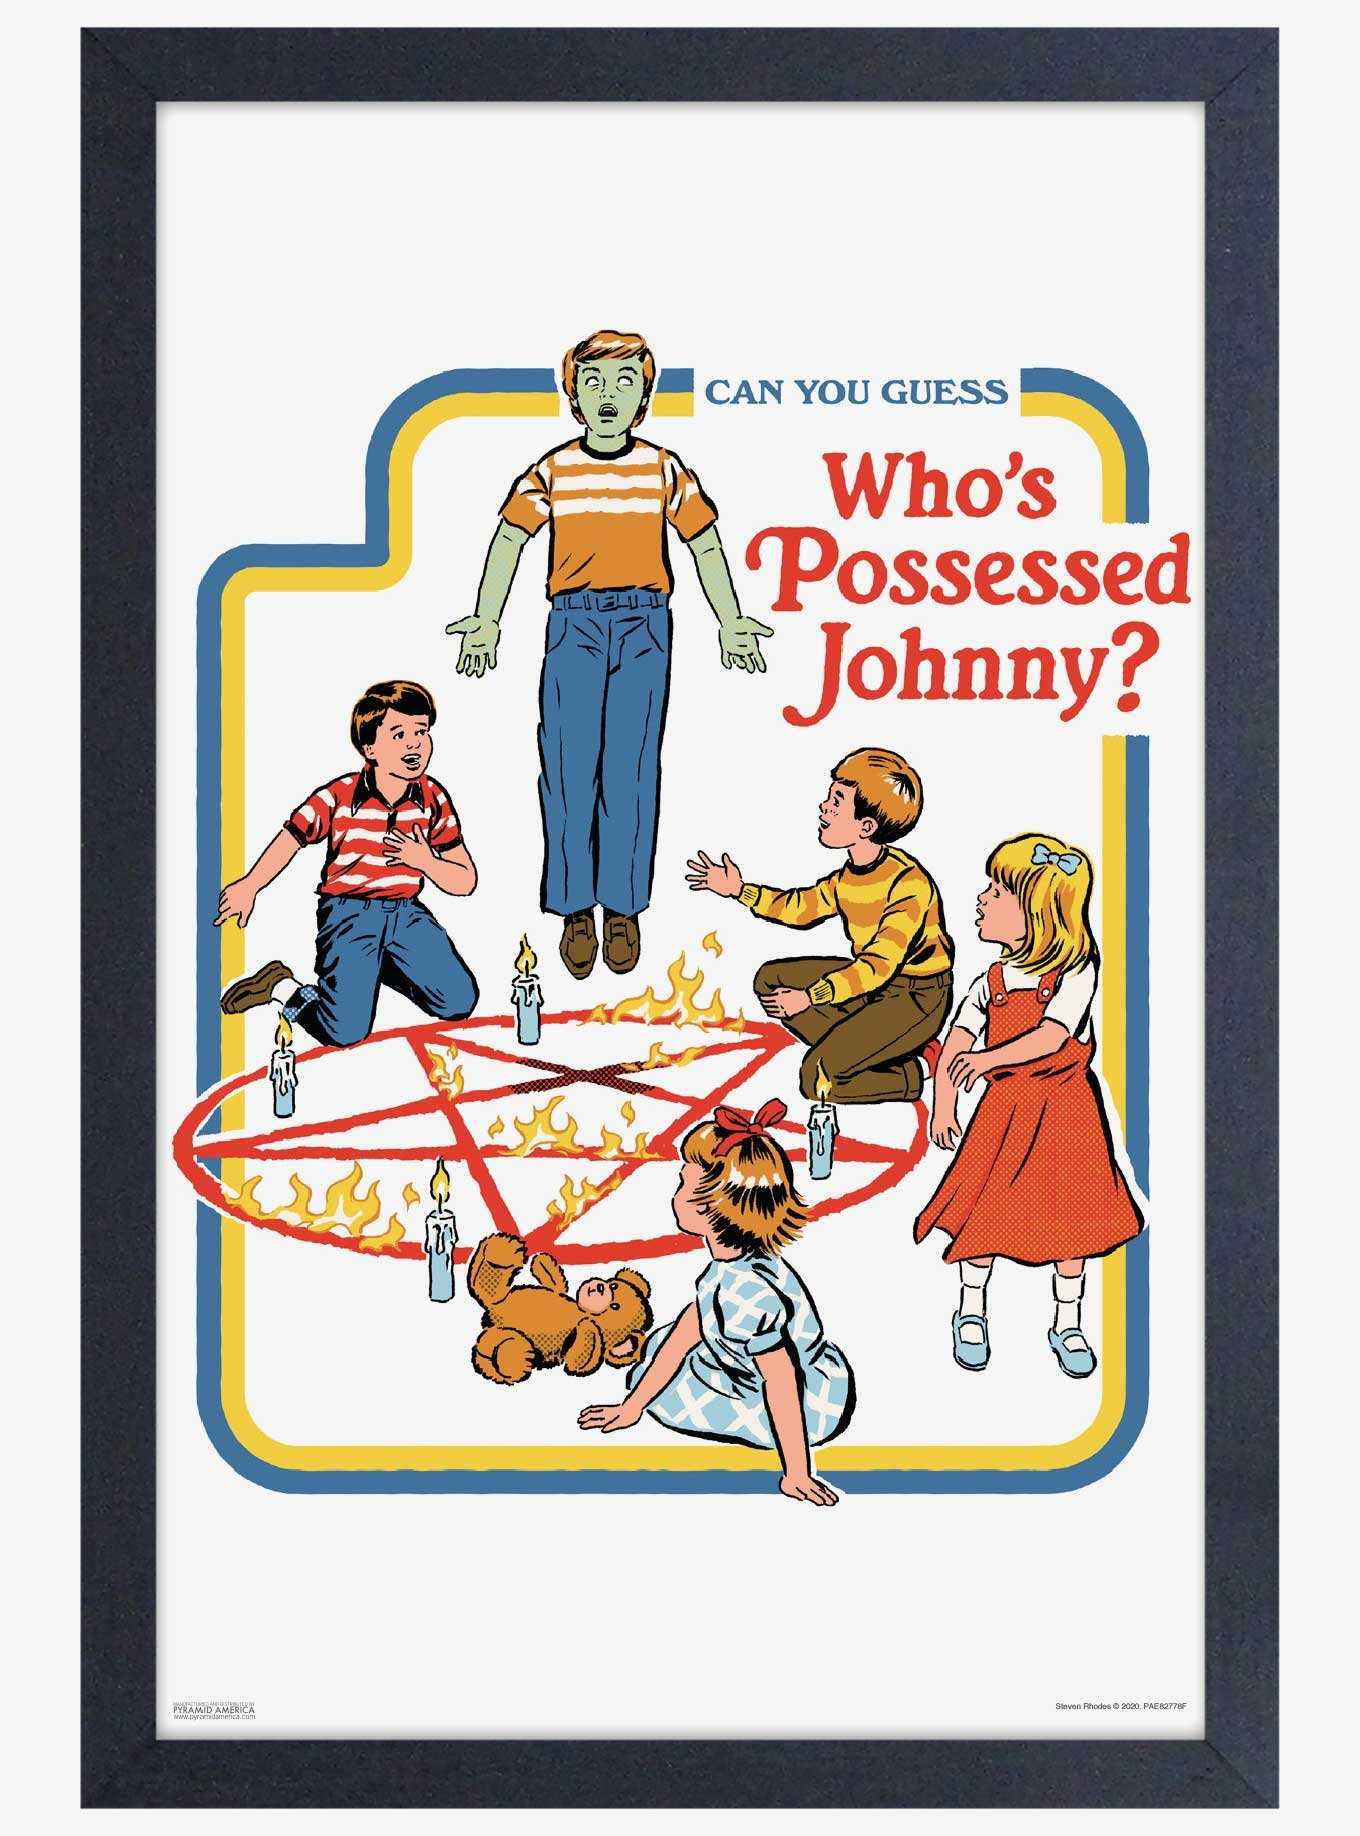 Possessed Johnny Framed Print By Steven Rhodes, , hi-res